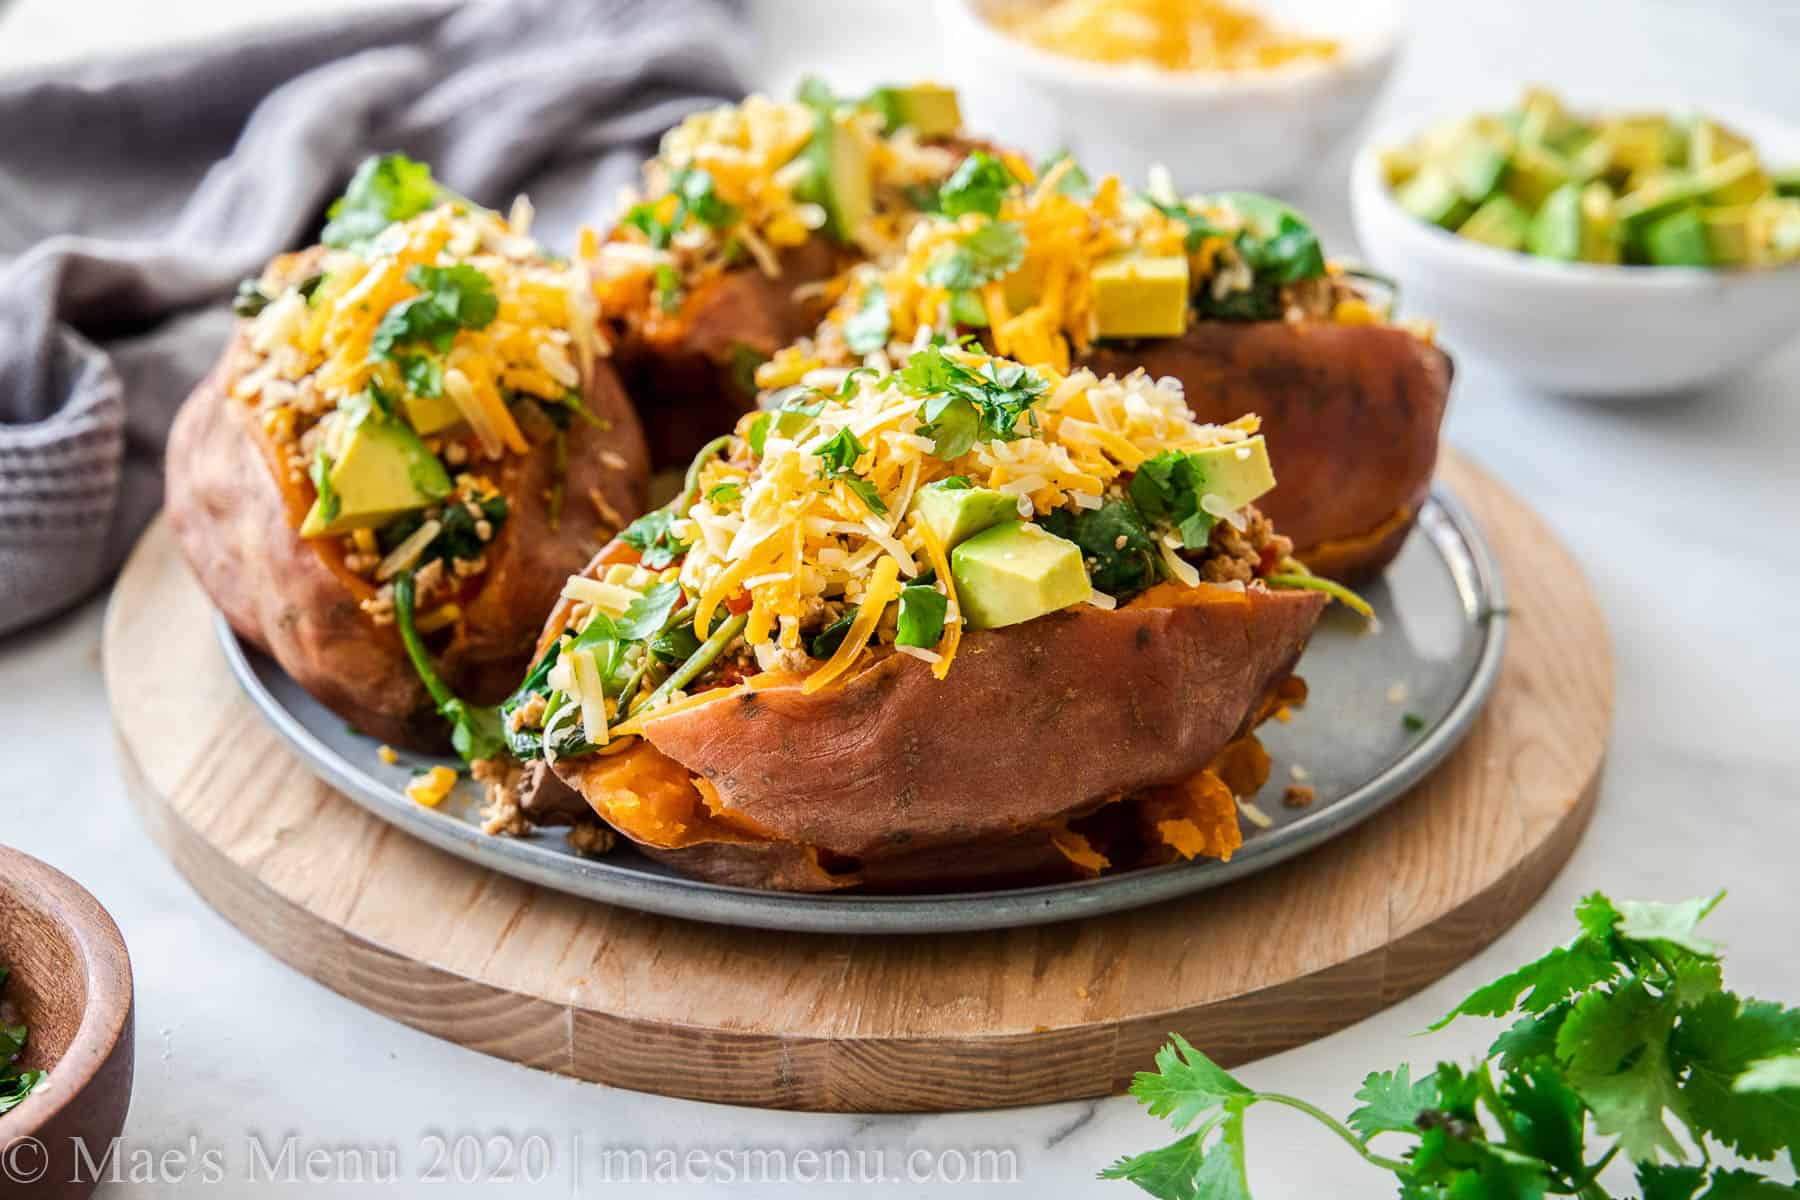 A large platter of taco stuffed sweet potatoes.